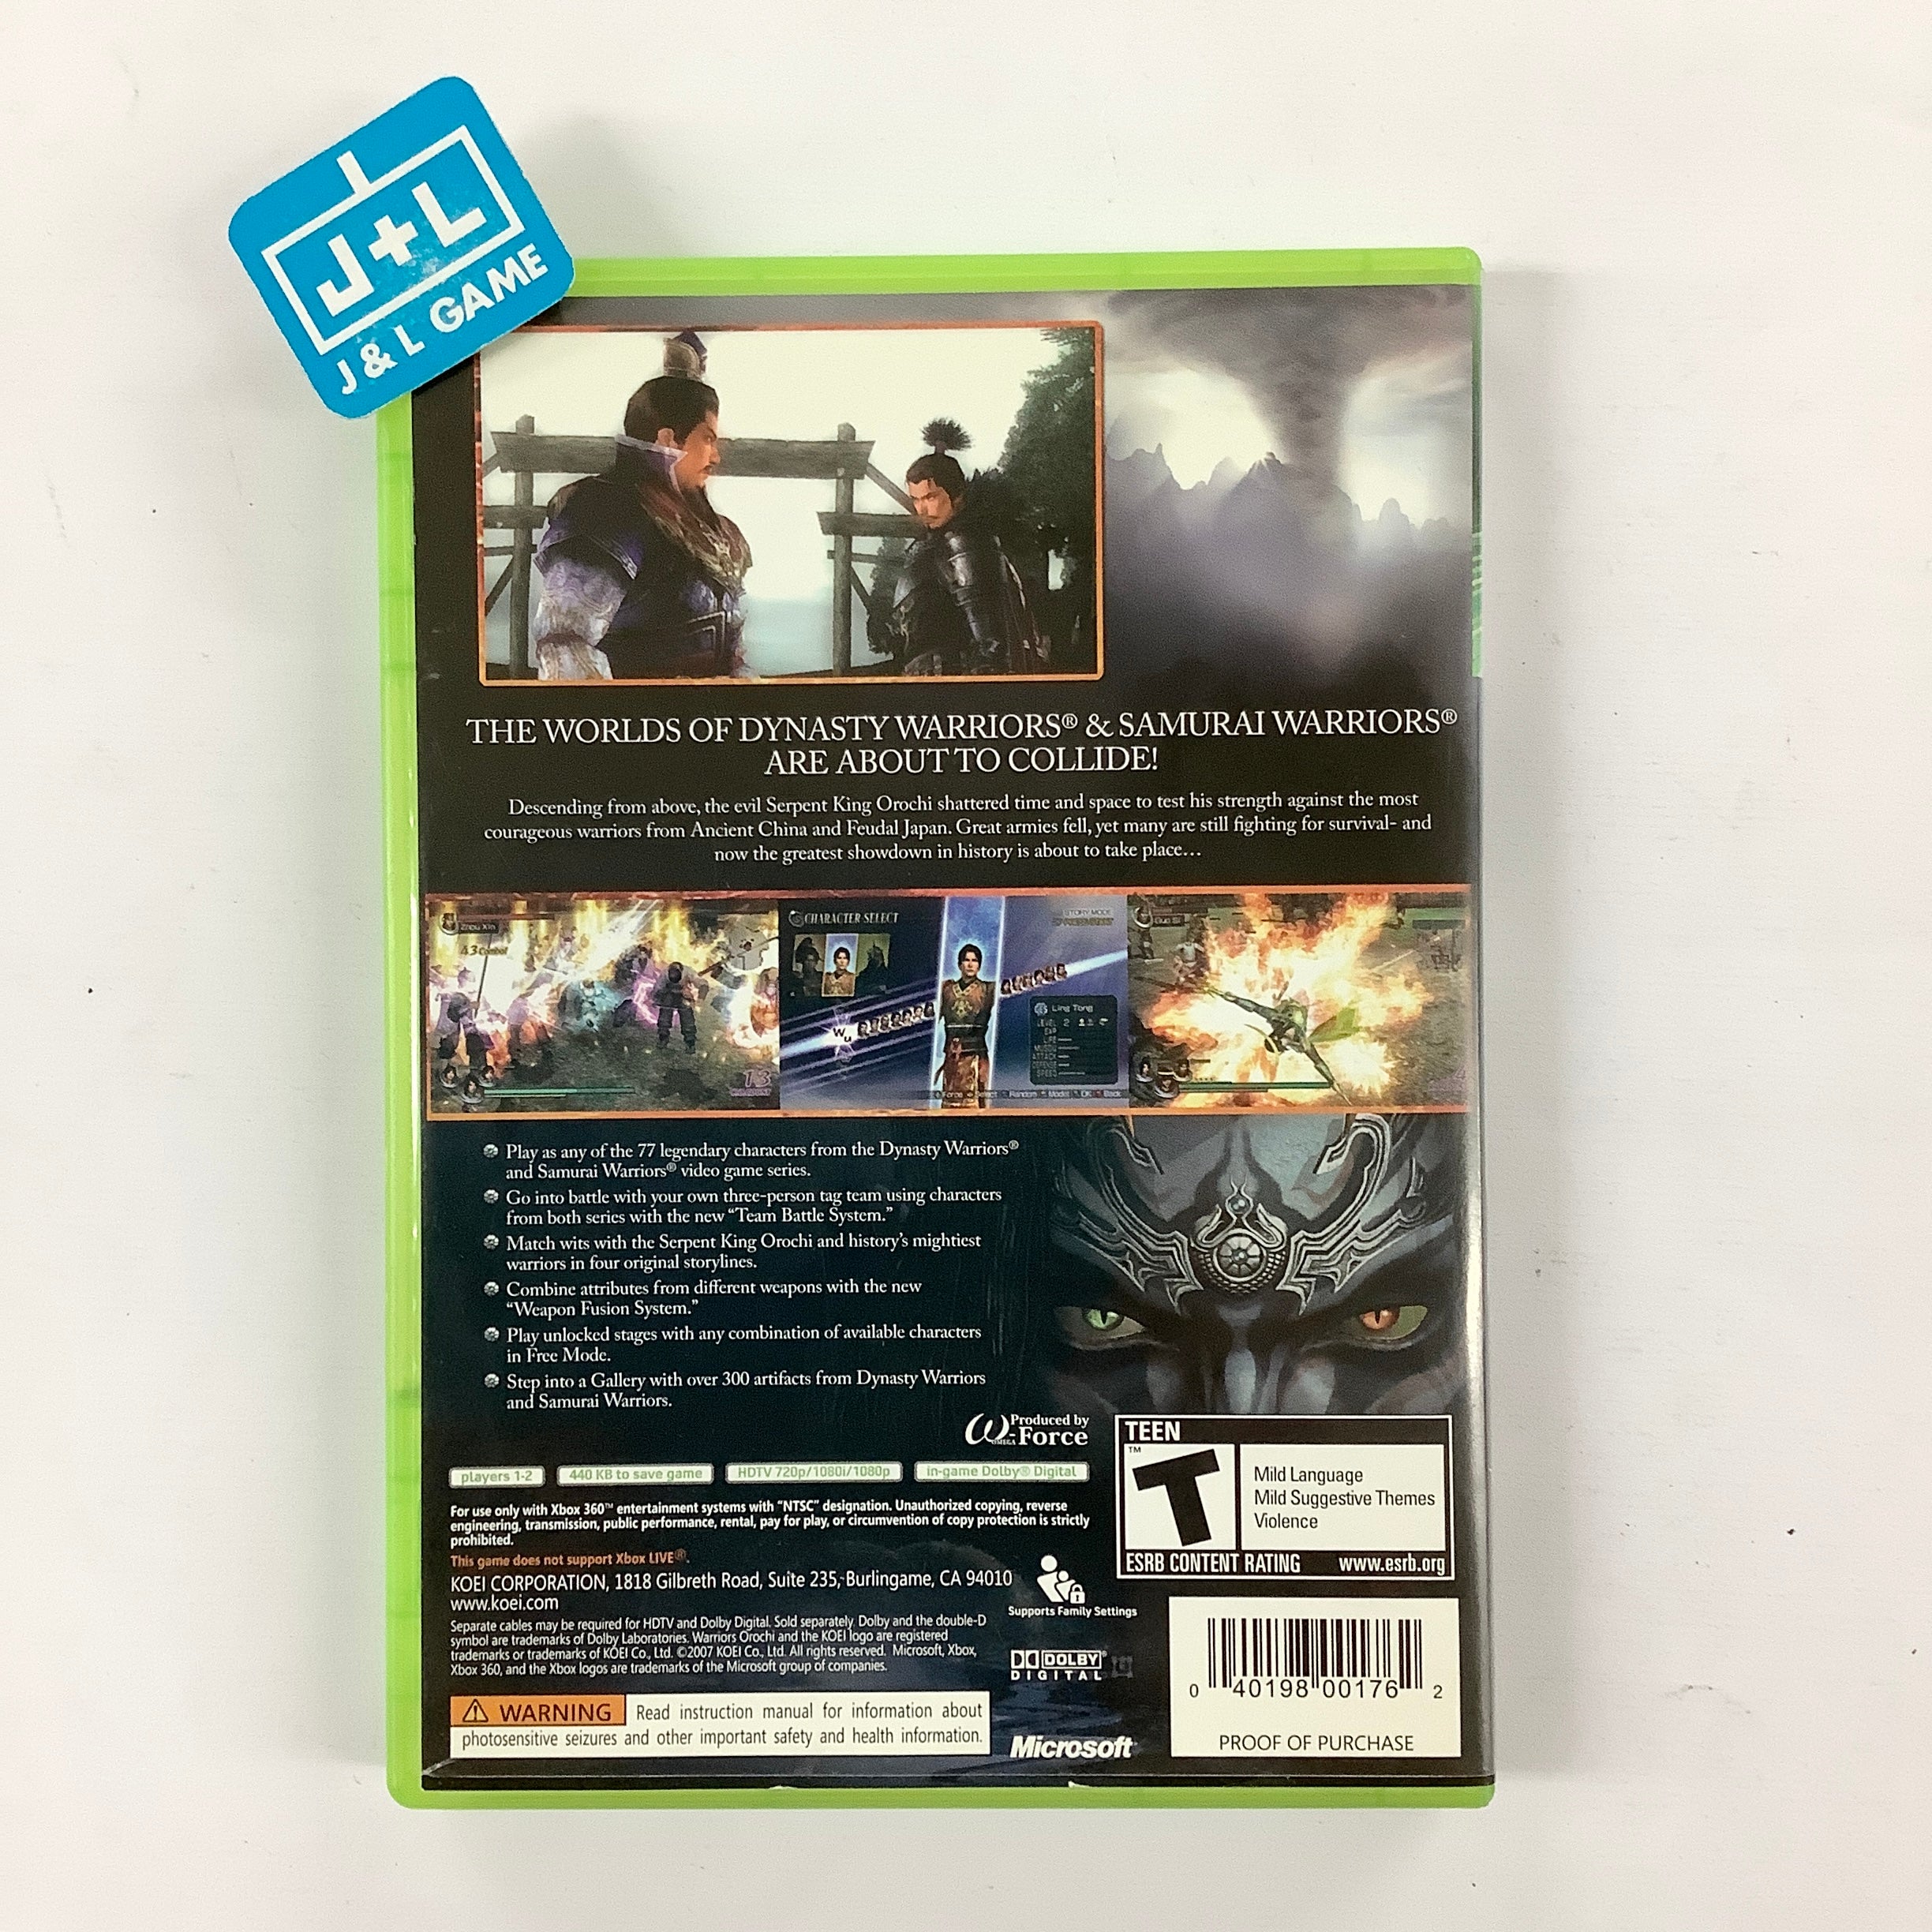 Warriors Orochi - Xbox 360 [Pre-Owned] Video Games Koei   